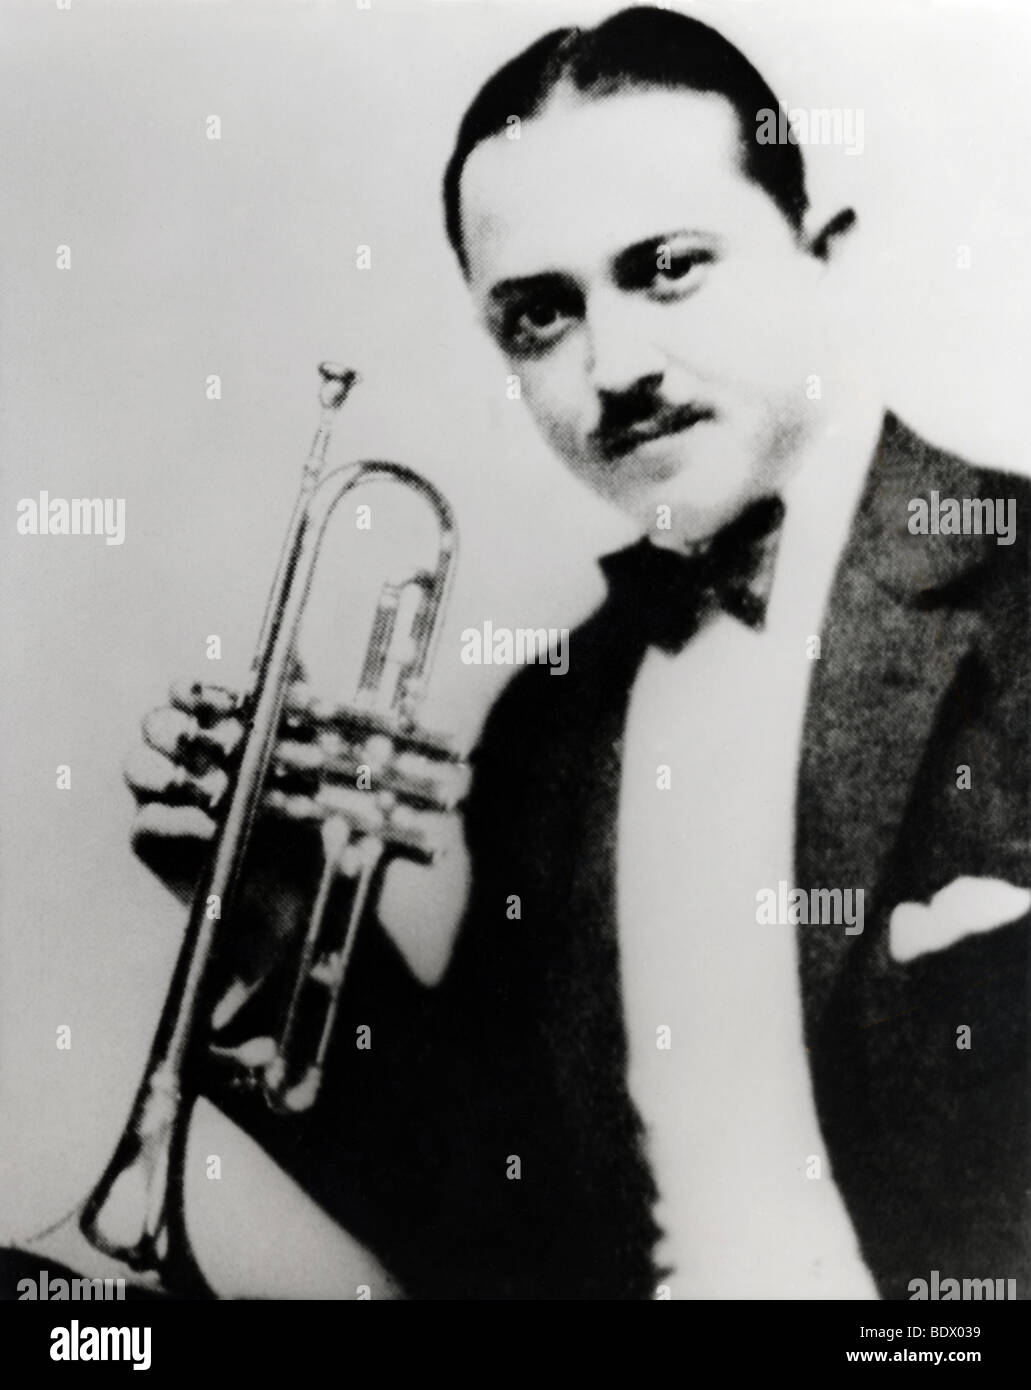 BIX BEIDERBECKE, músico de jazz estadounidense Foto de stock